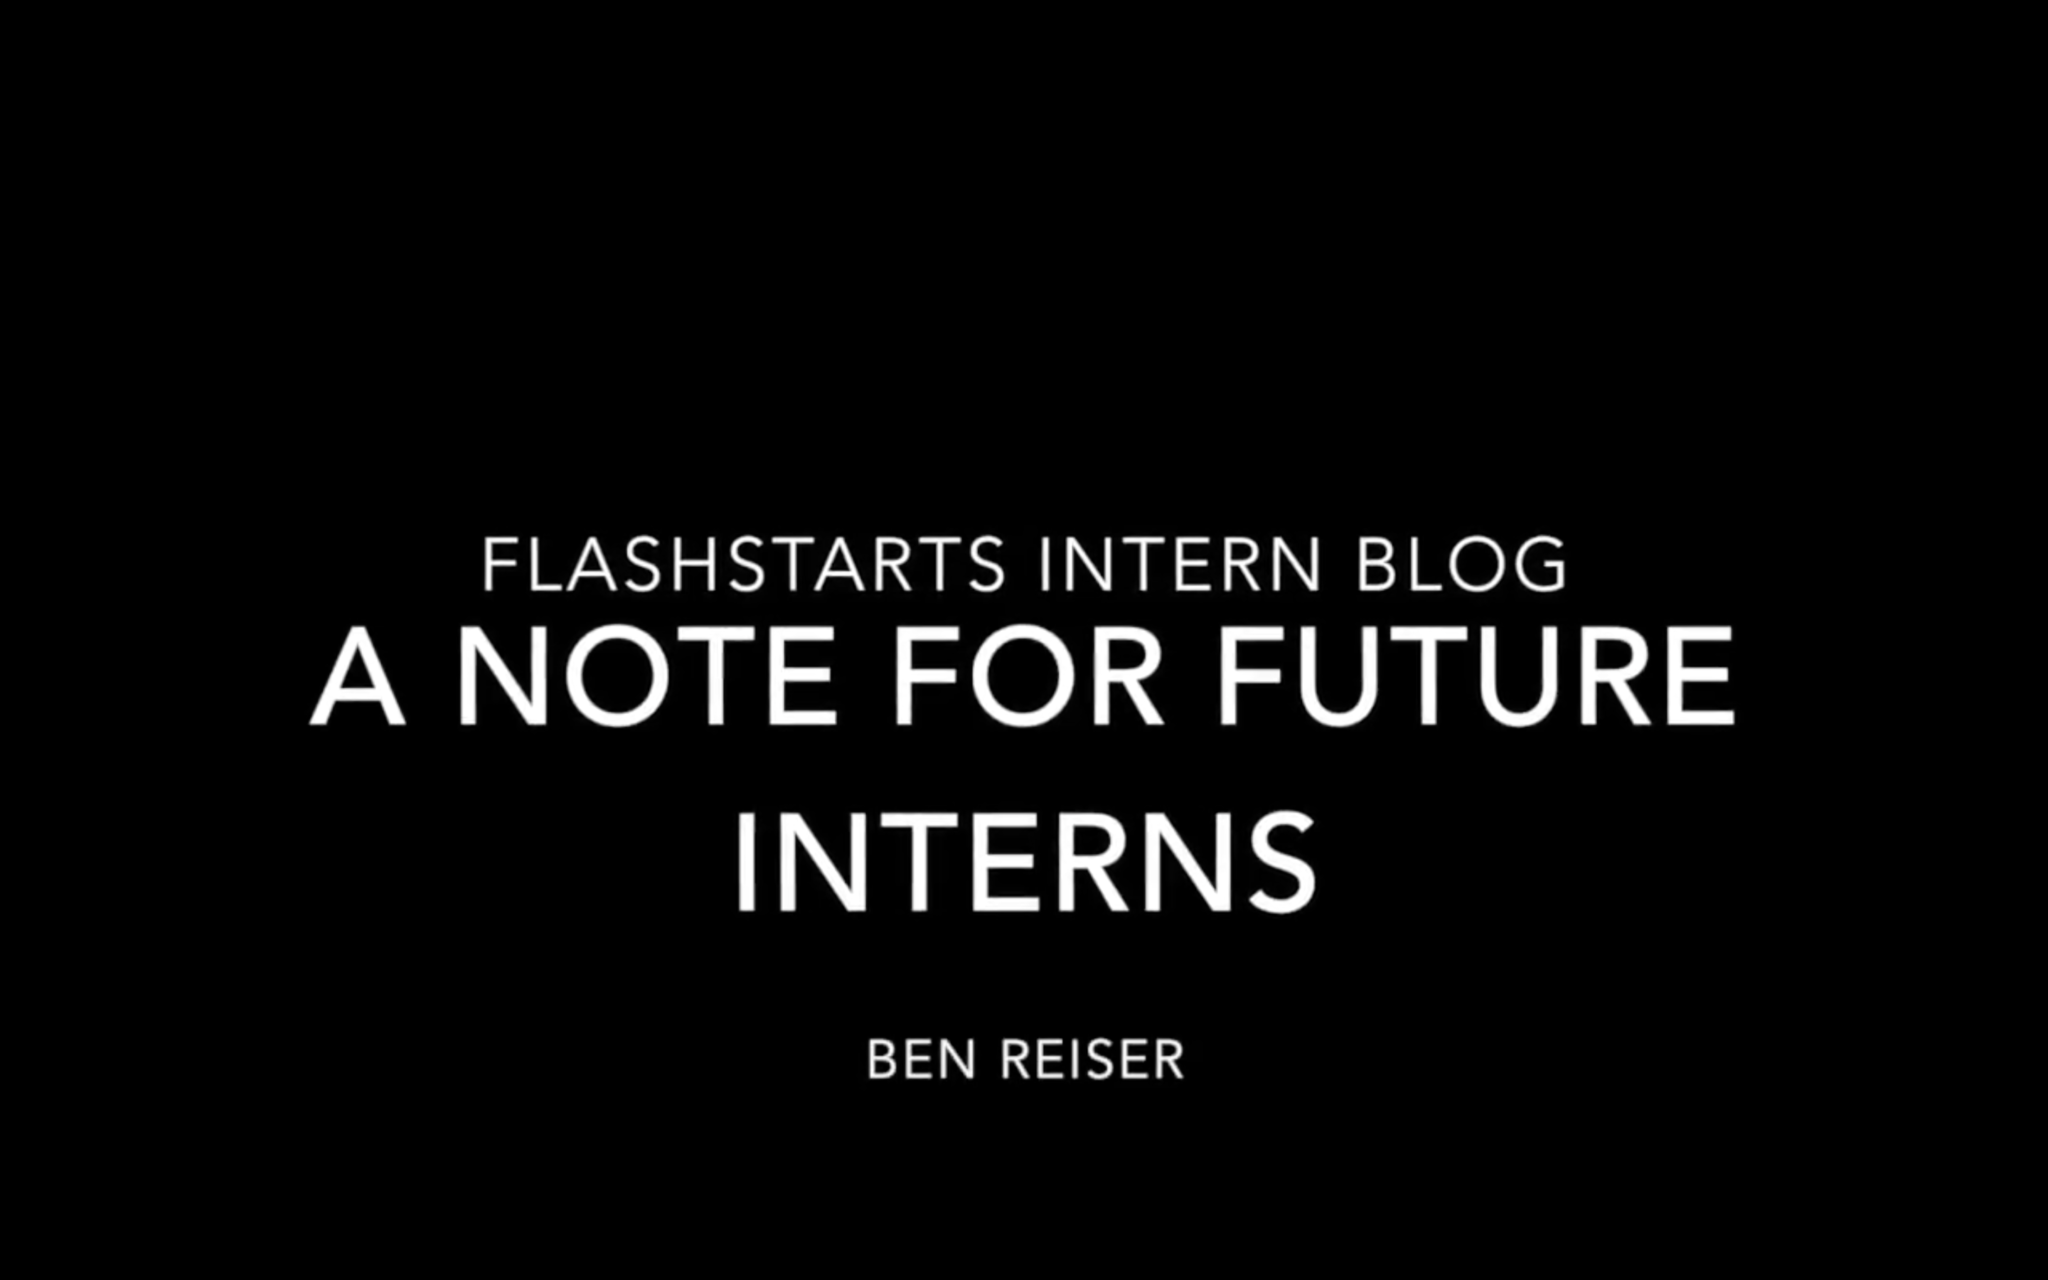 “A Note For Future Interns” by Ben Reiser